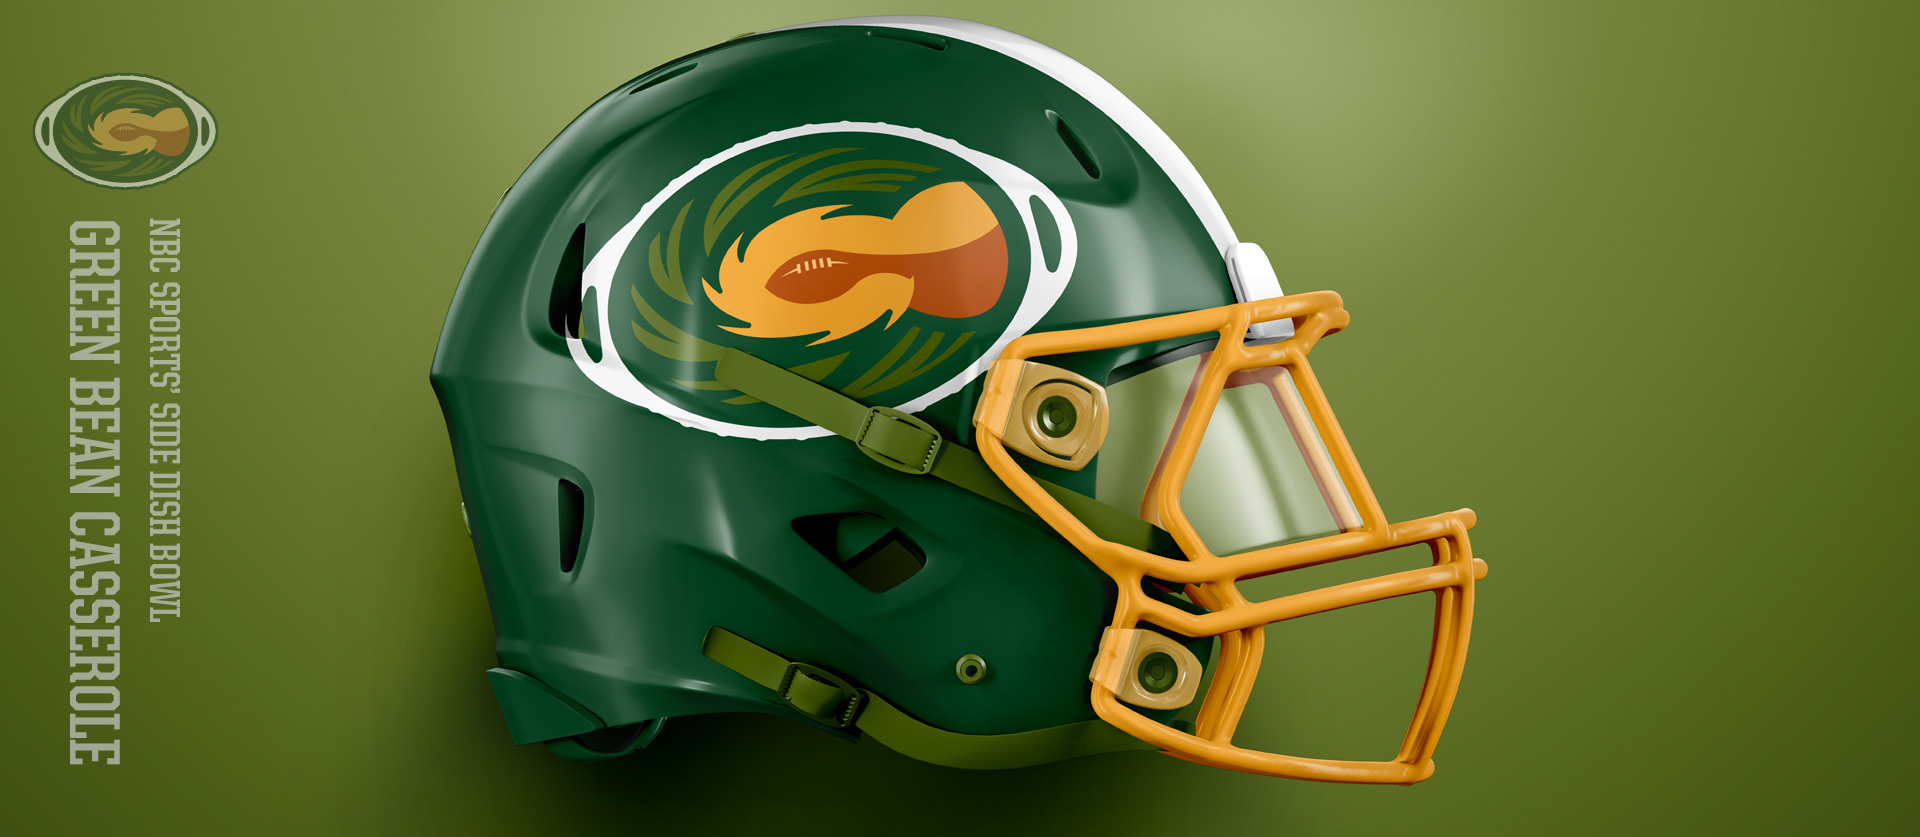 Green Bean Casseroles Helmet Side View - Football Uniform Design for NBC Sports Thanksgiving Side Dish Bowl